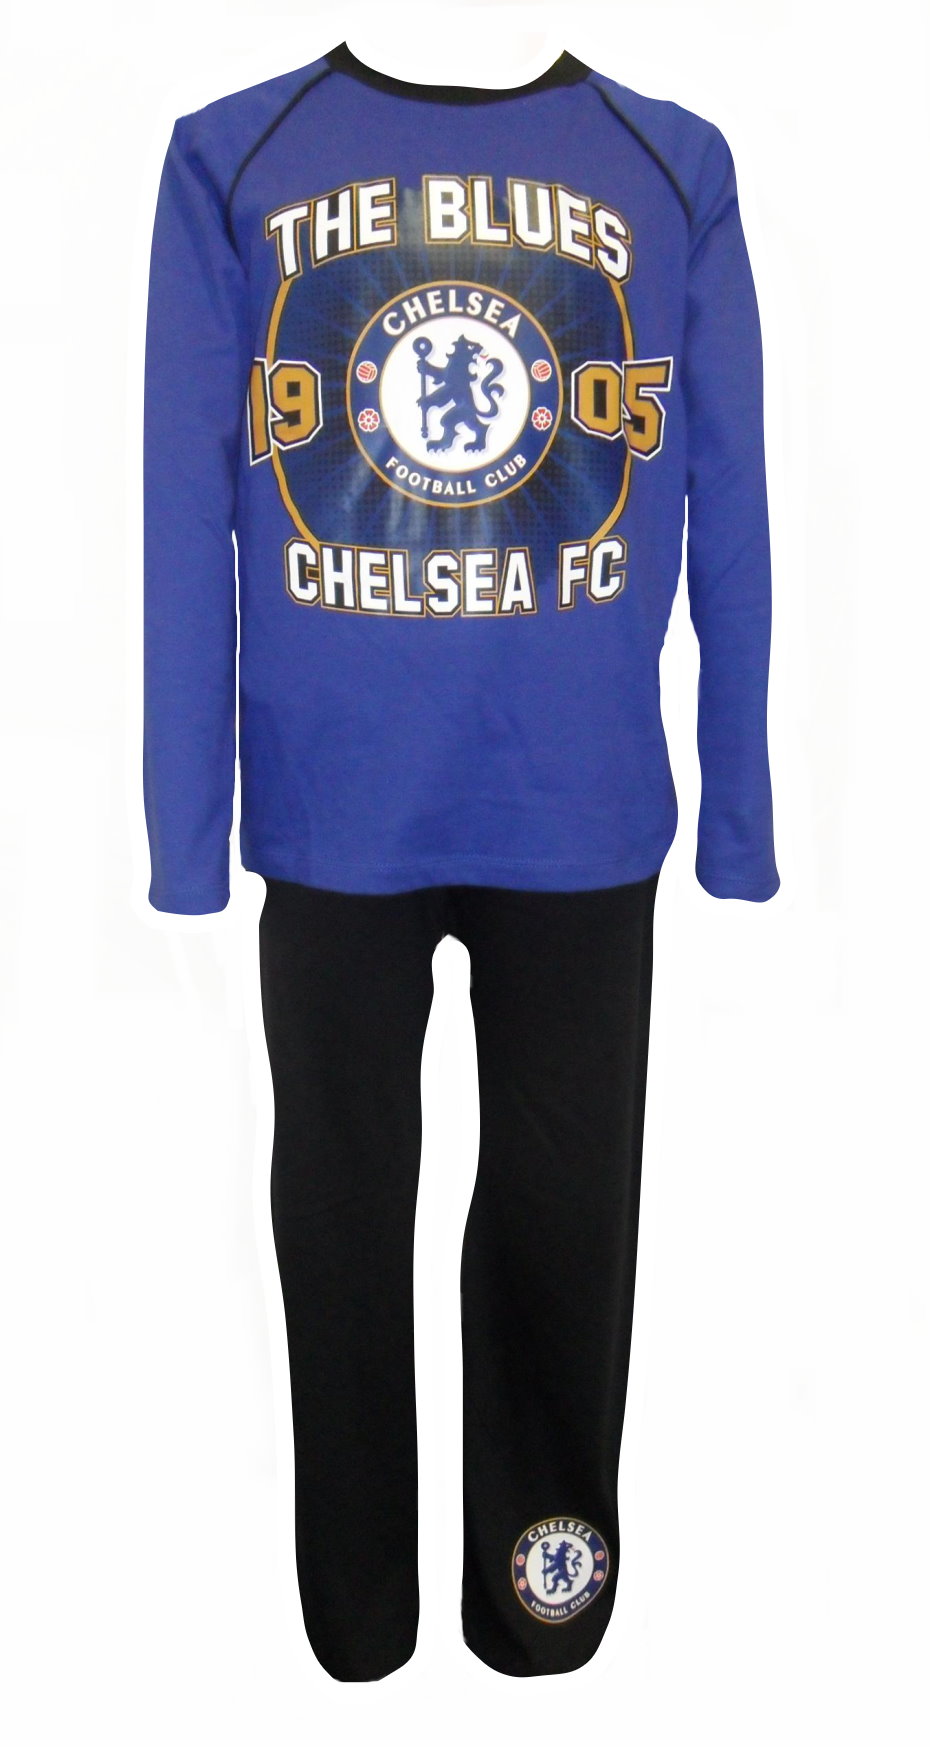 Chelsea Football Club Pyjamas.JPG  by Thingimijigs